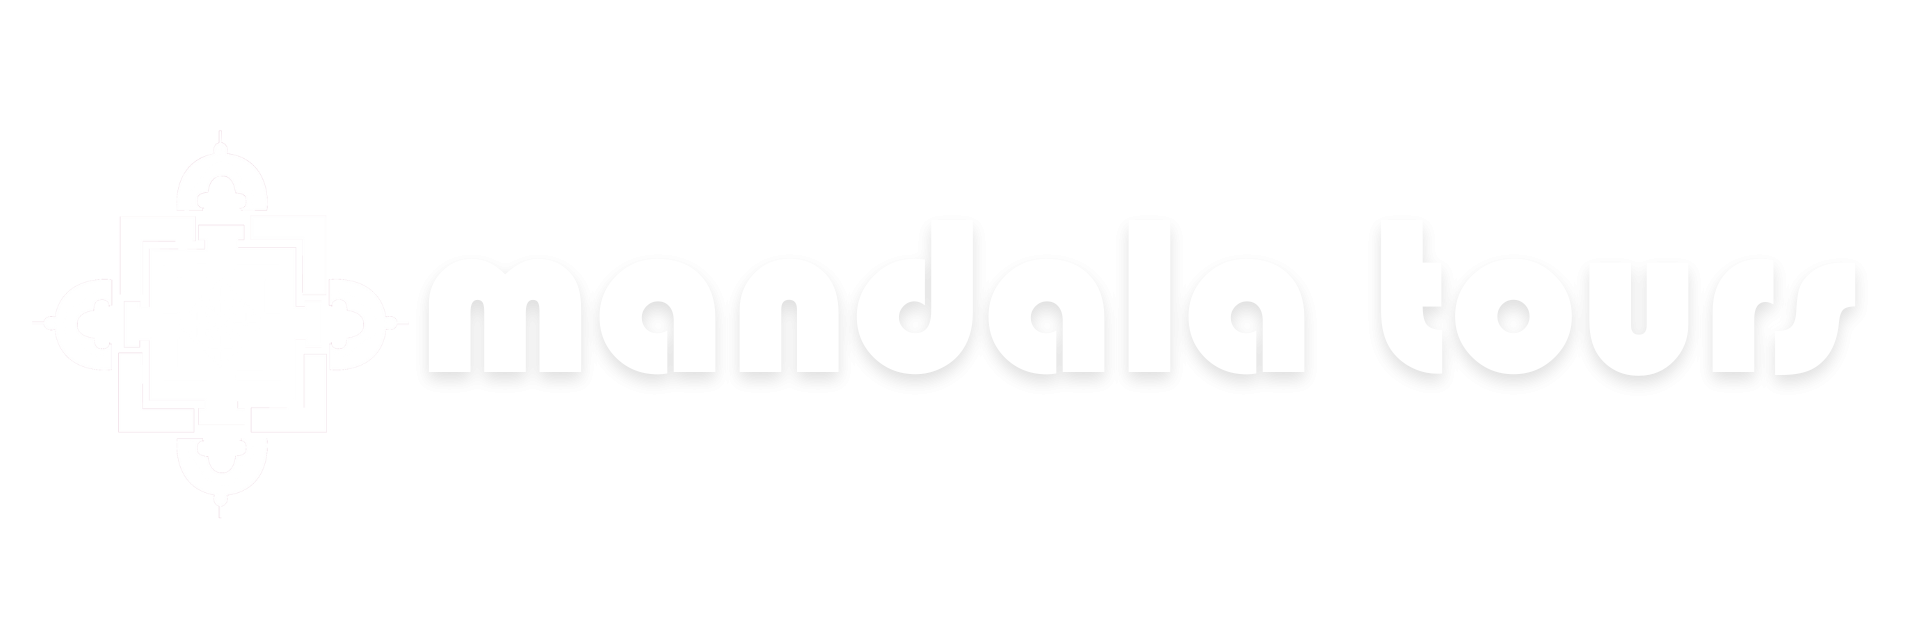 (c) Mandalatours.com.br